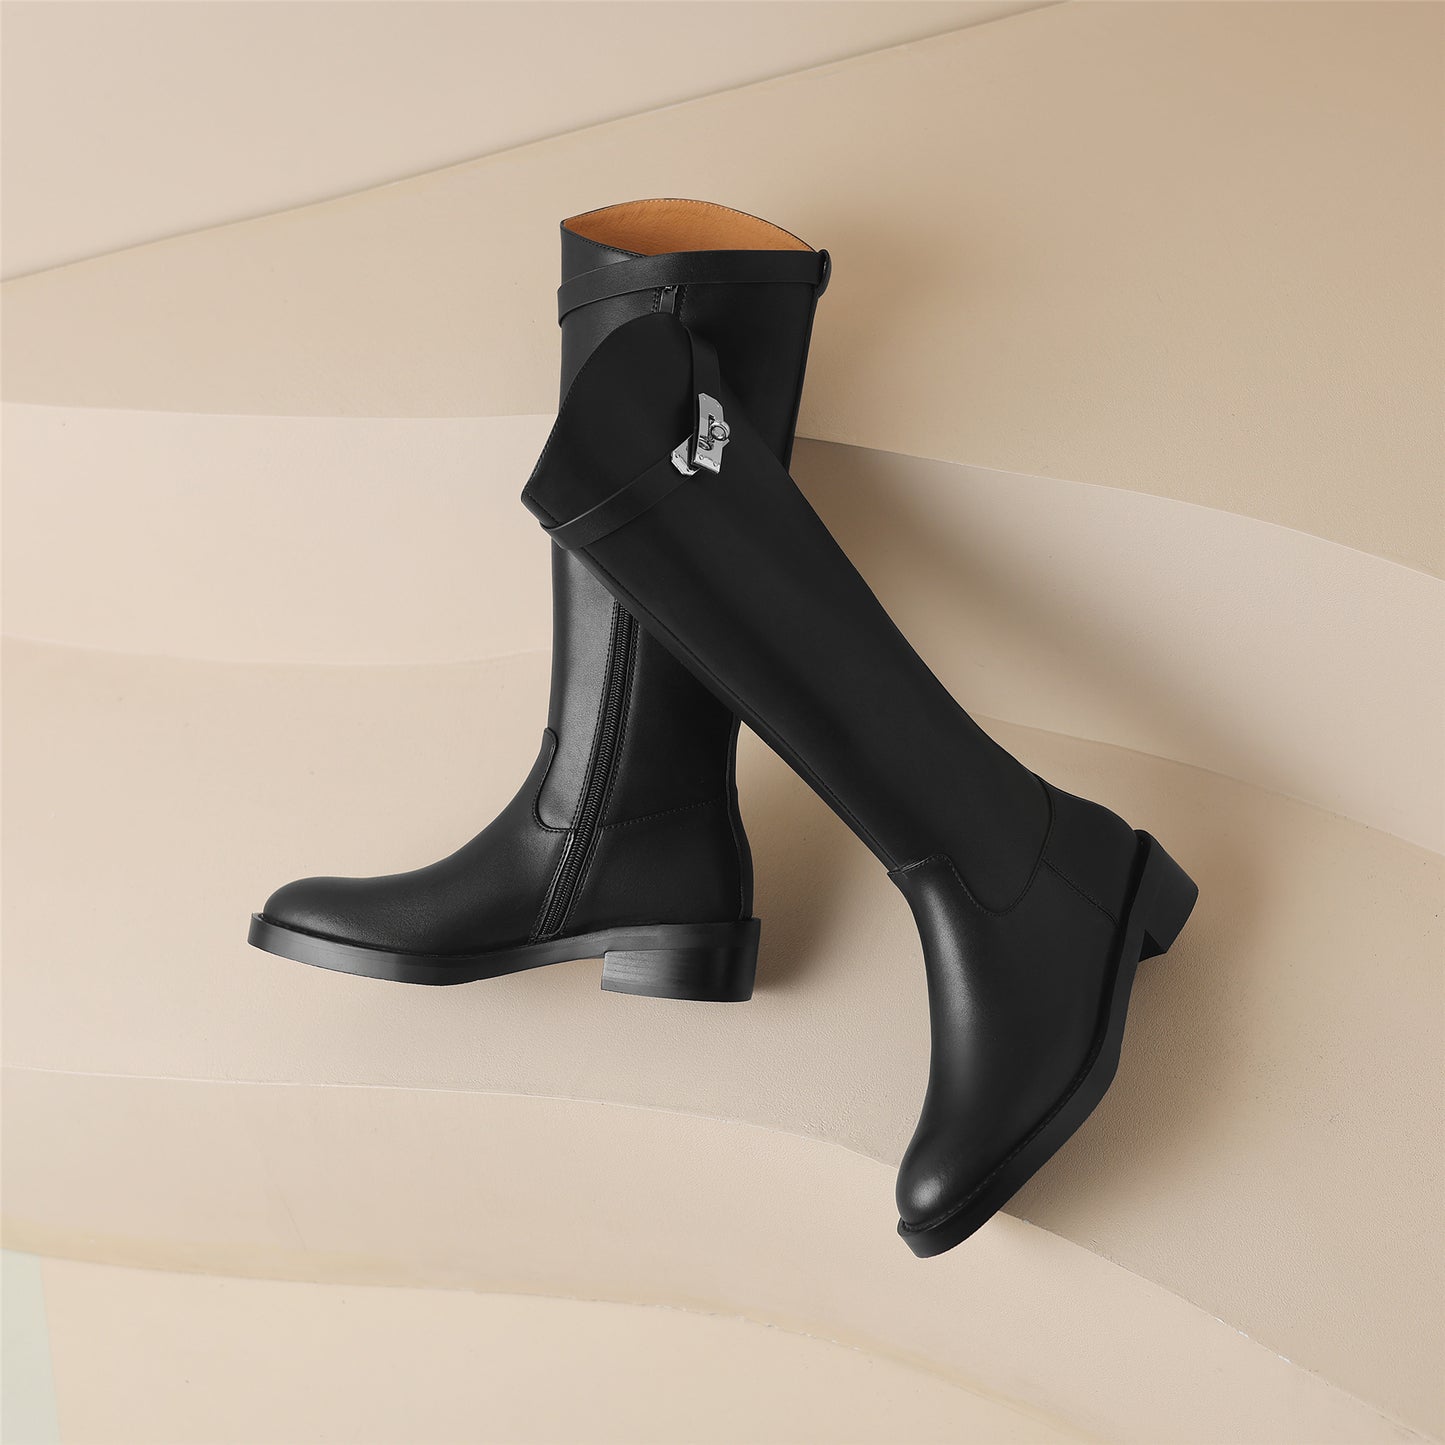 TinaCus Women's Round Toe Genuine Leather Handmade Chunky Heel Modern Buckle Side Zip Knee High Boots